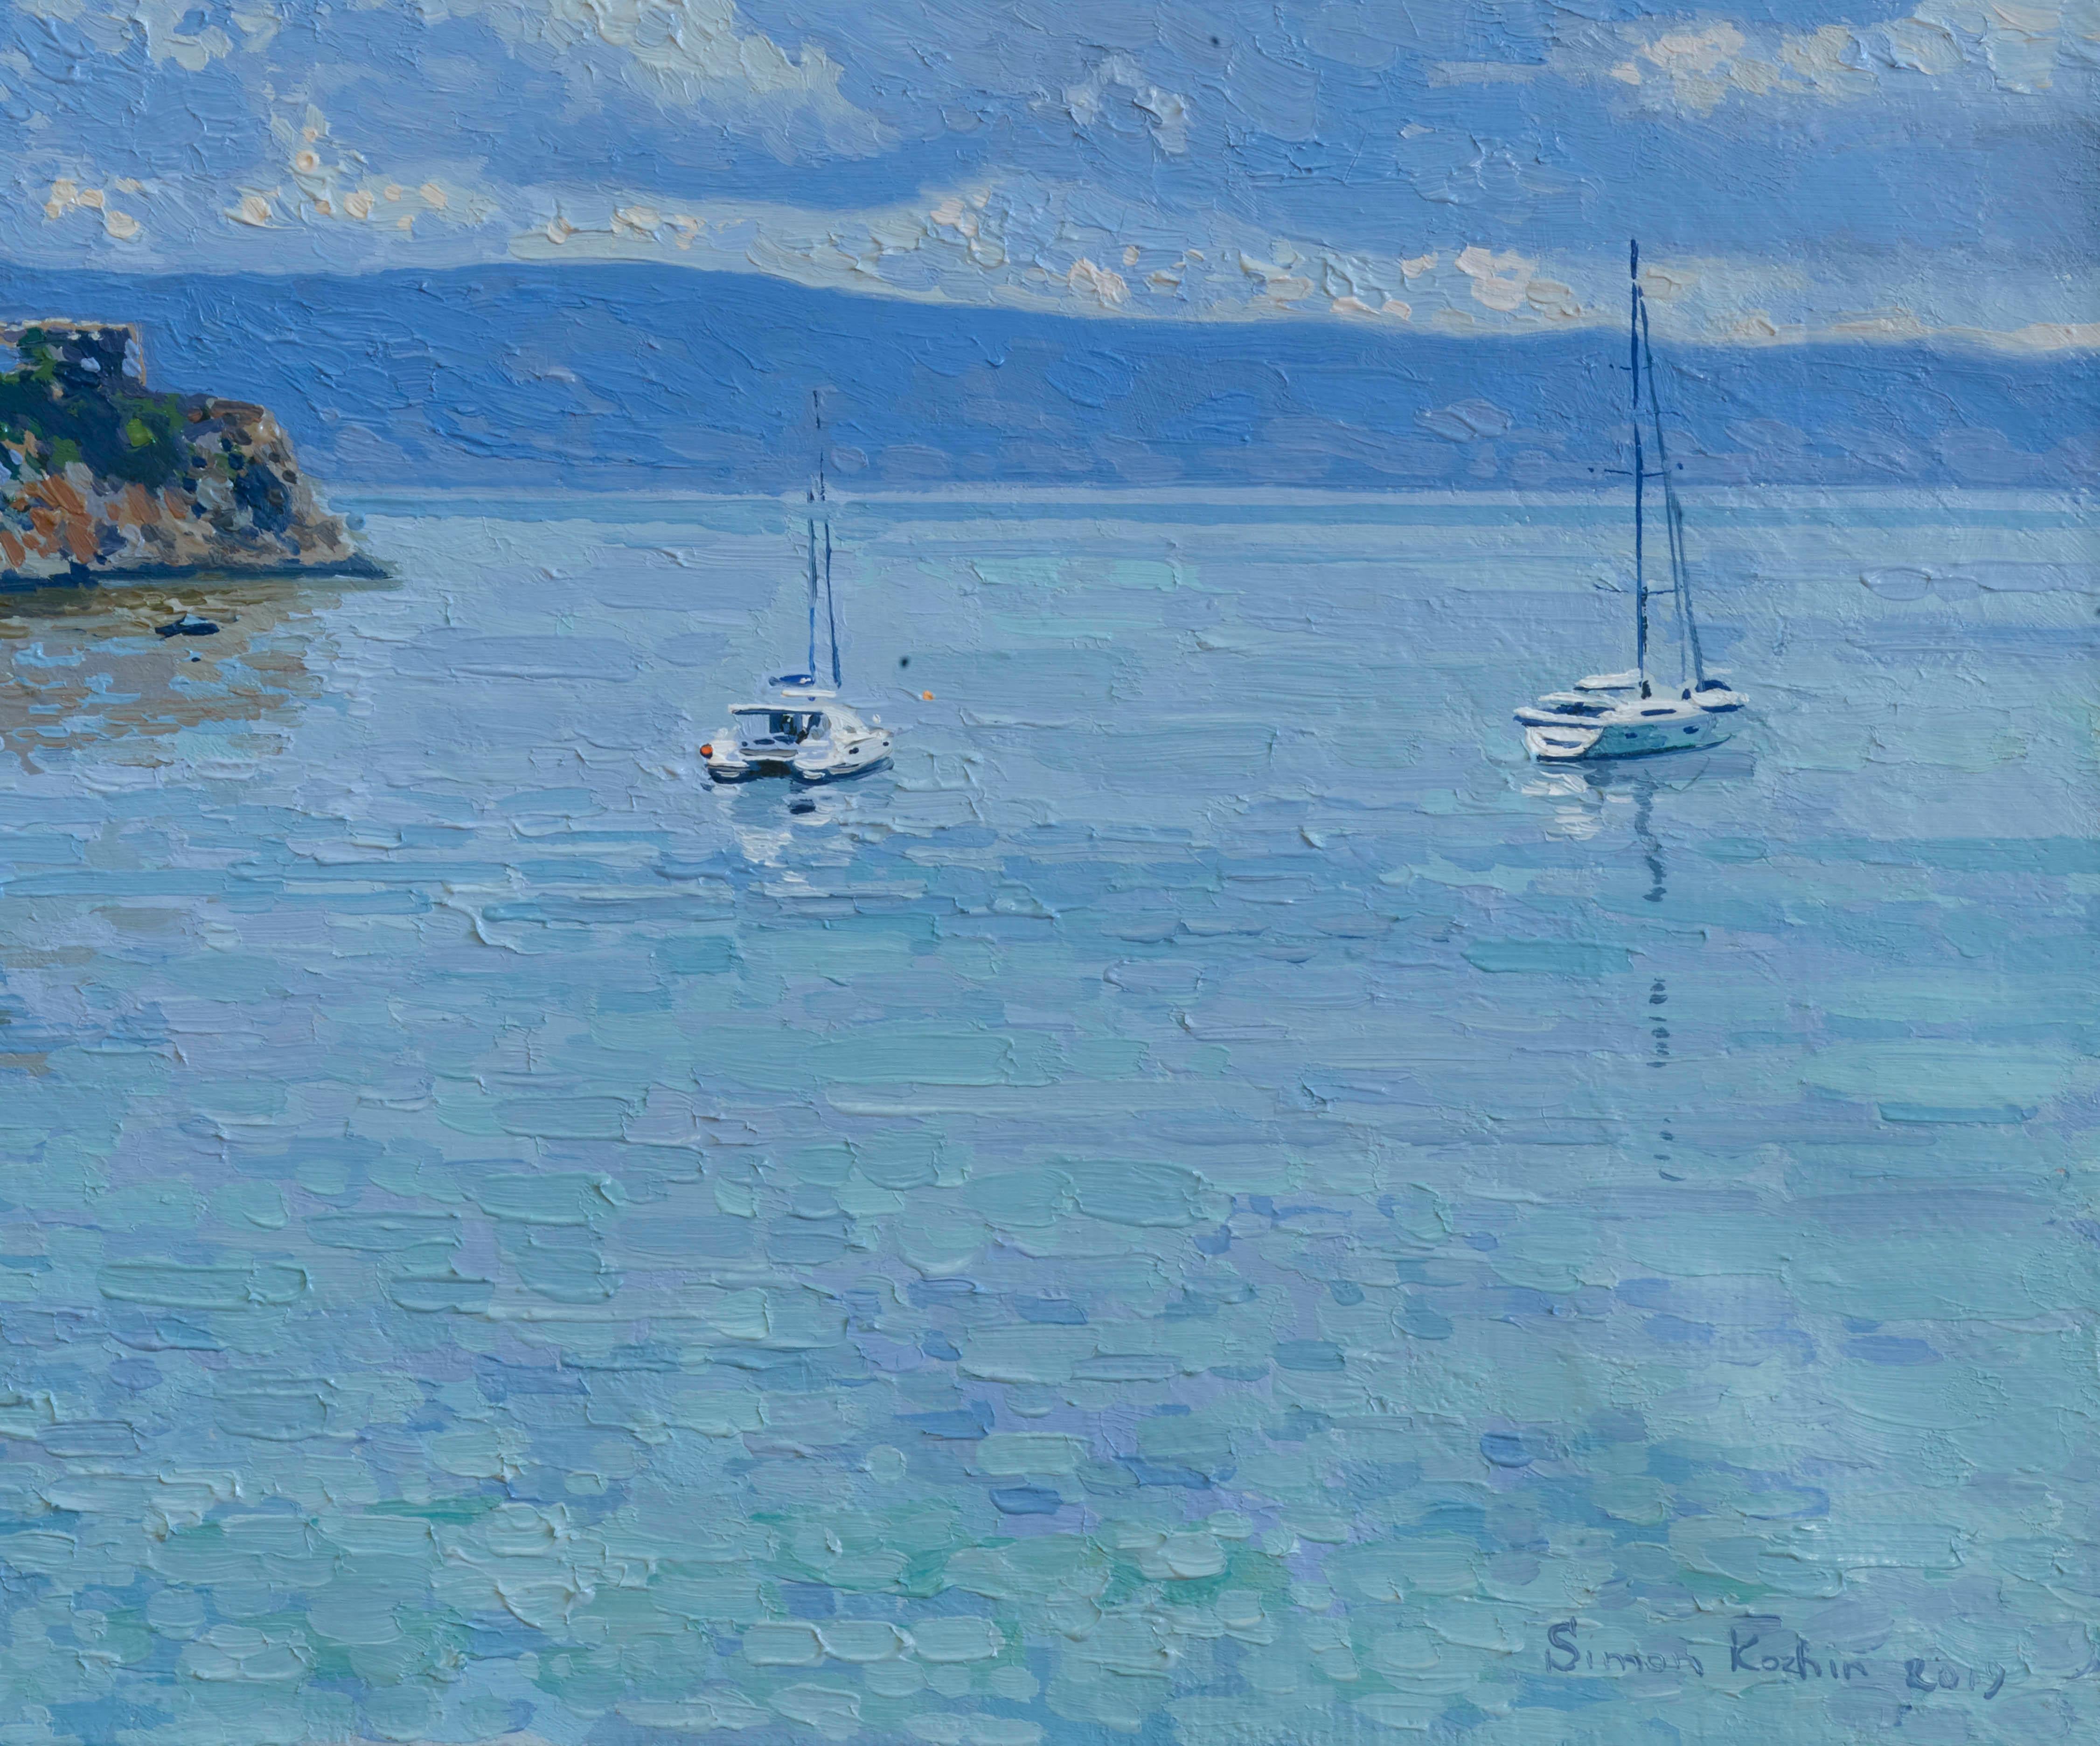 Garitsa Bay, Original Oil Painting by Simon Kozhin For Sale 4